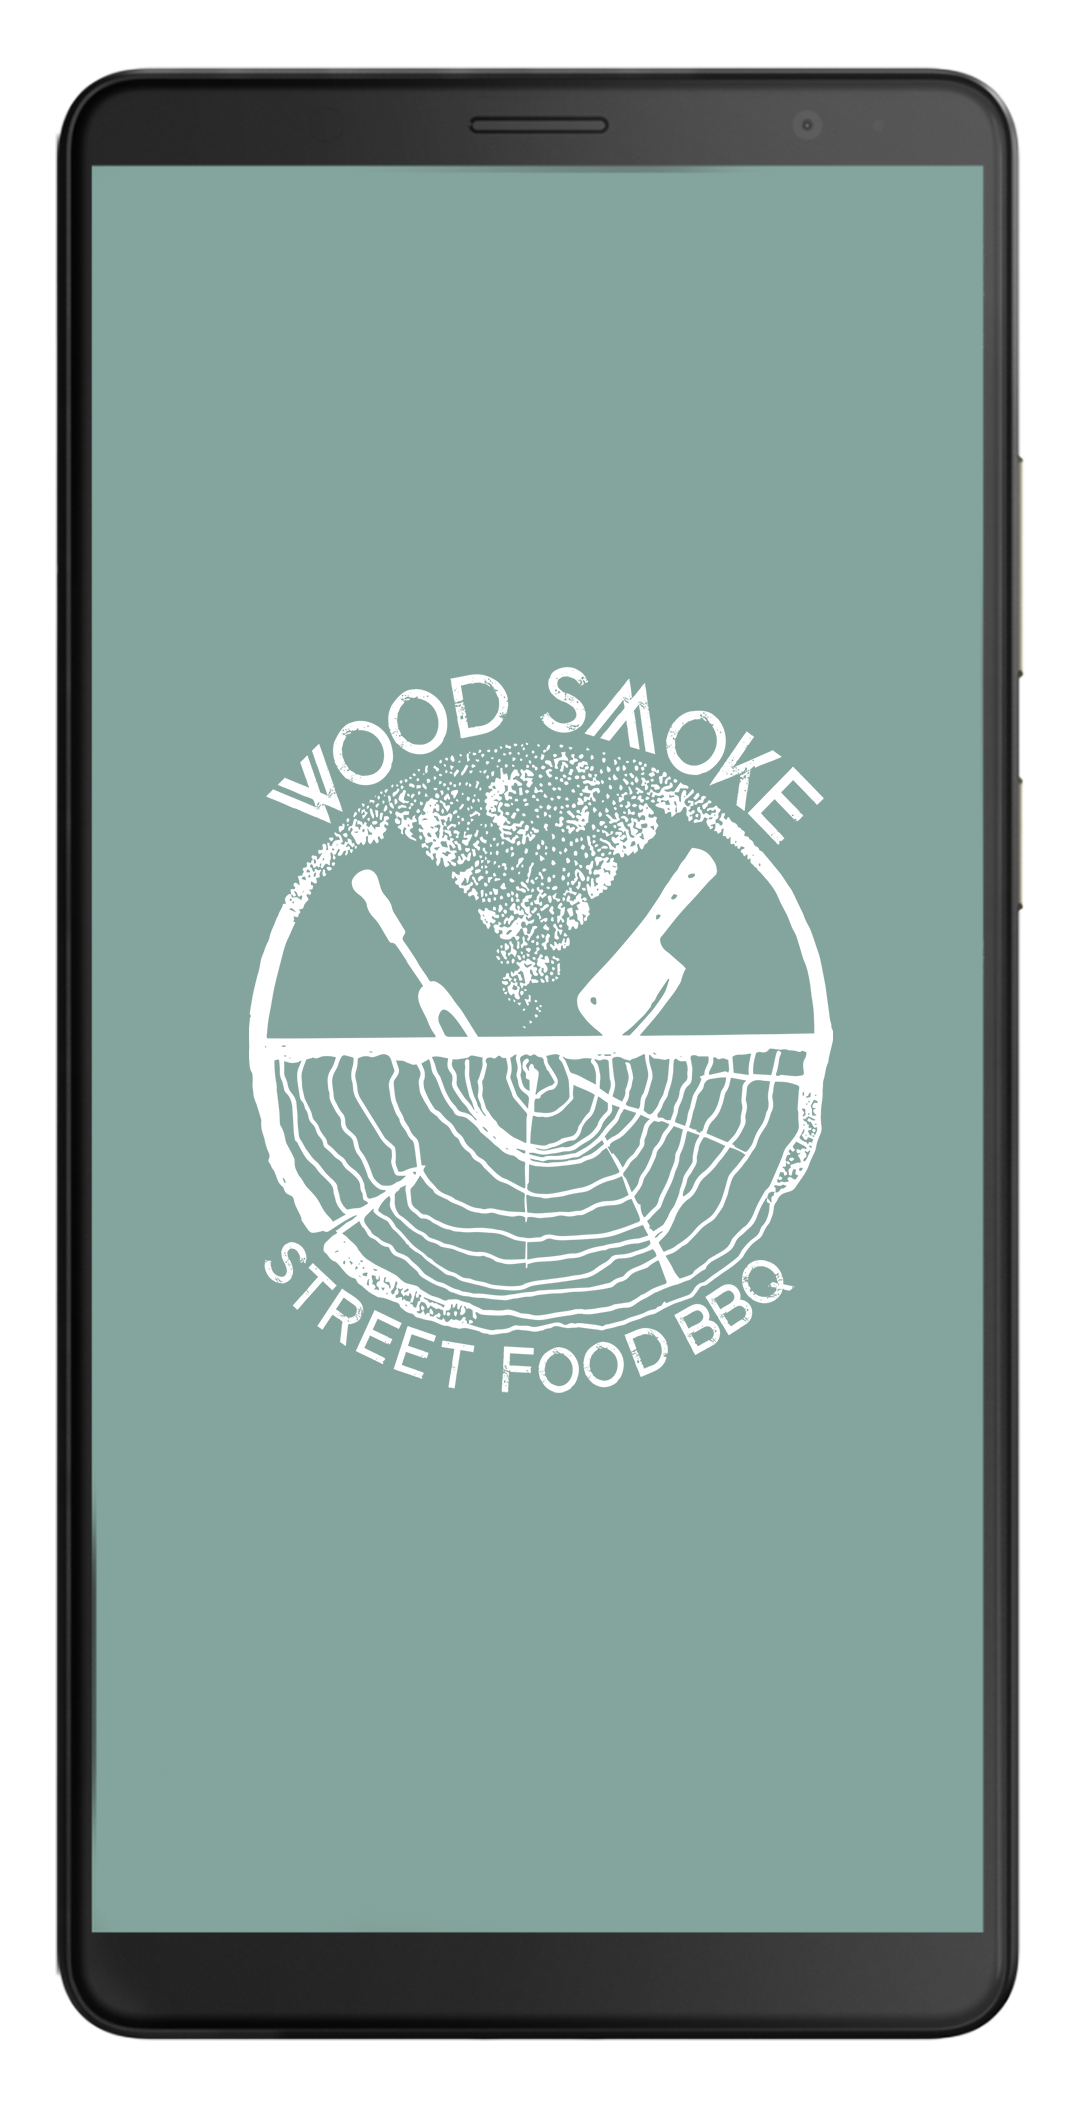 logo du food truck wood smoke